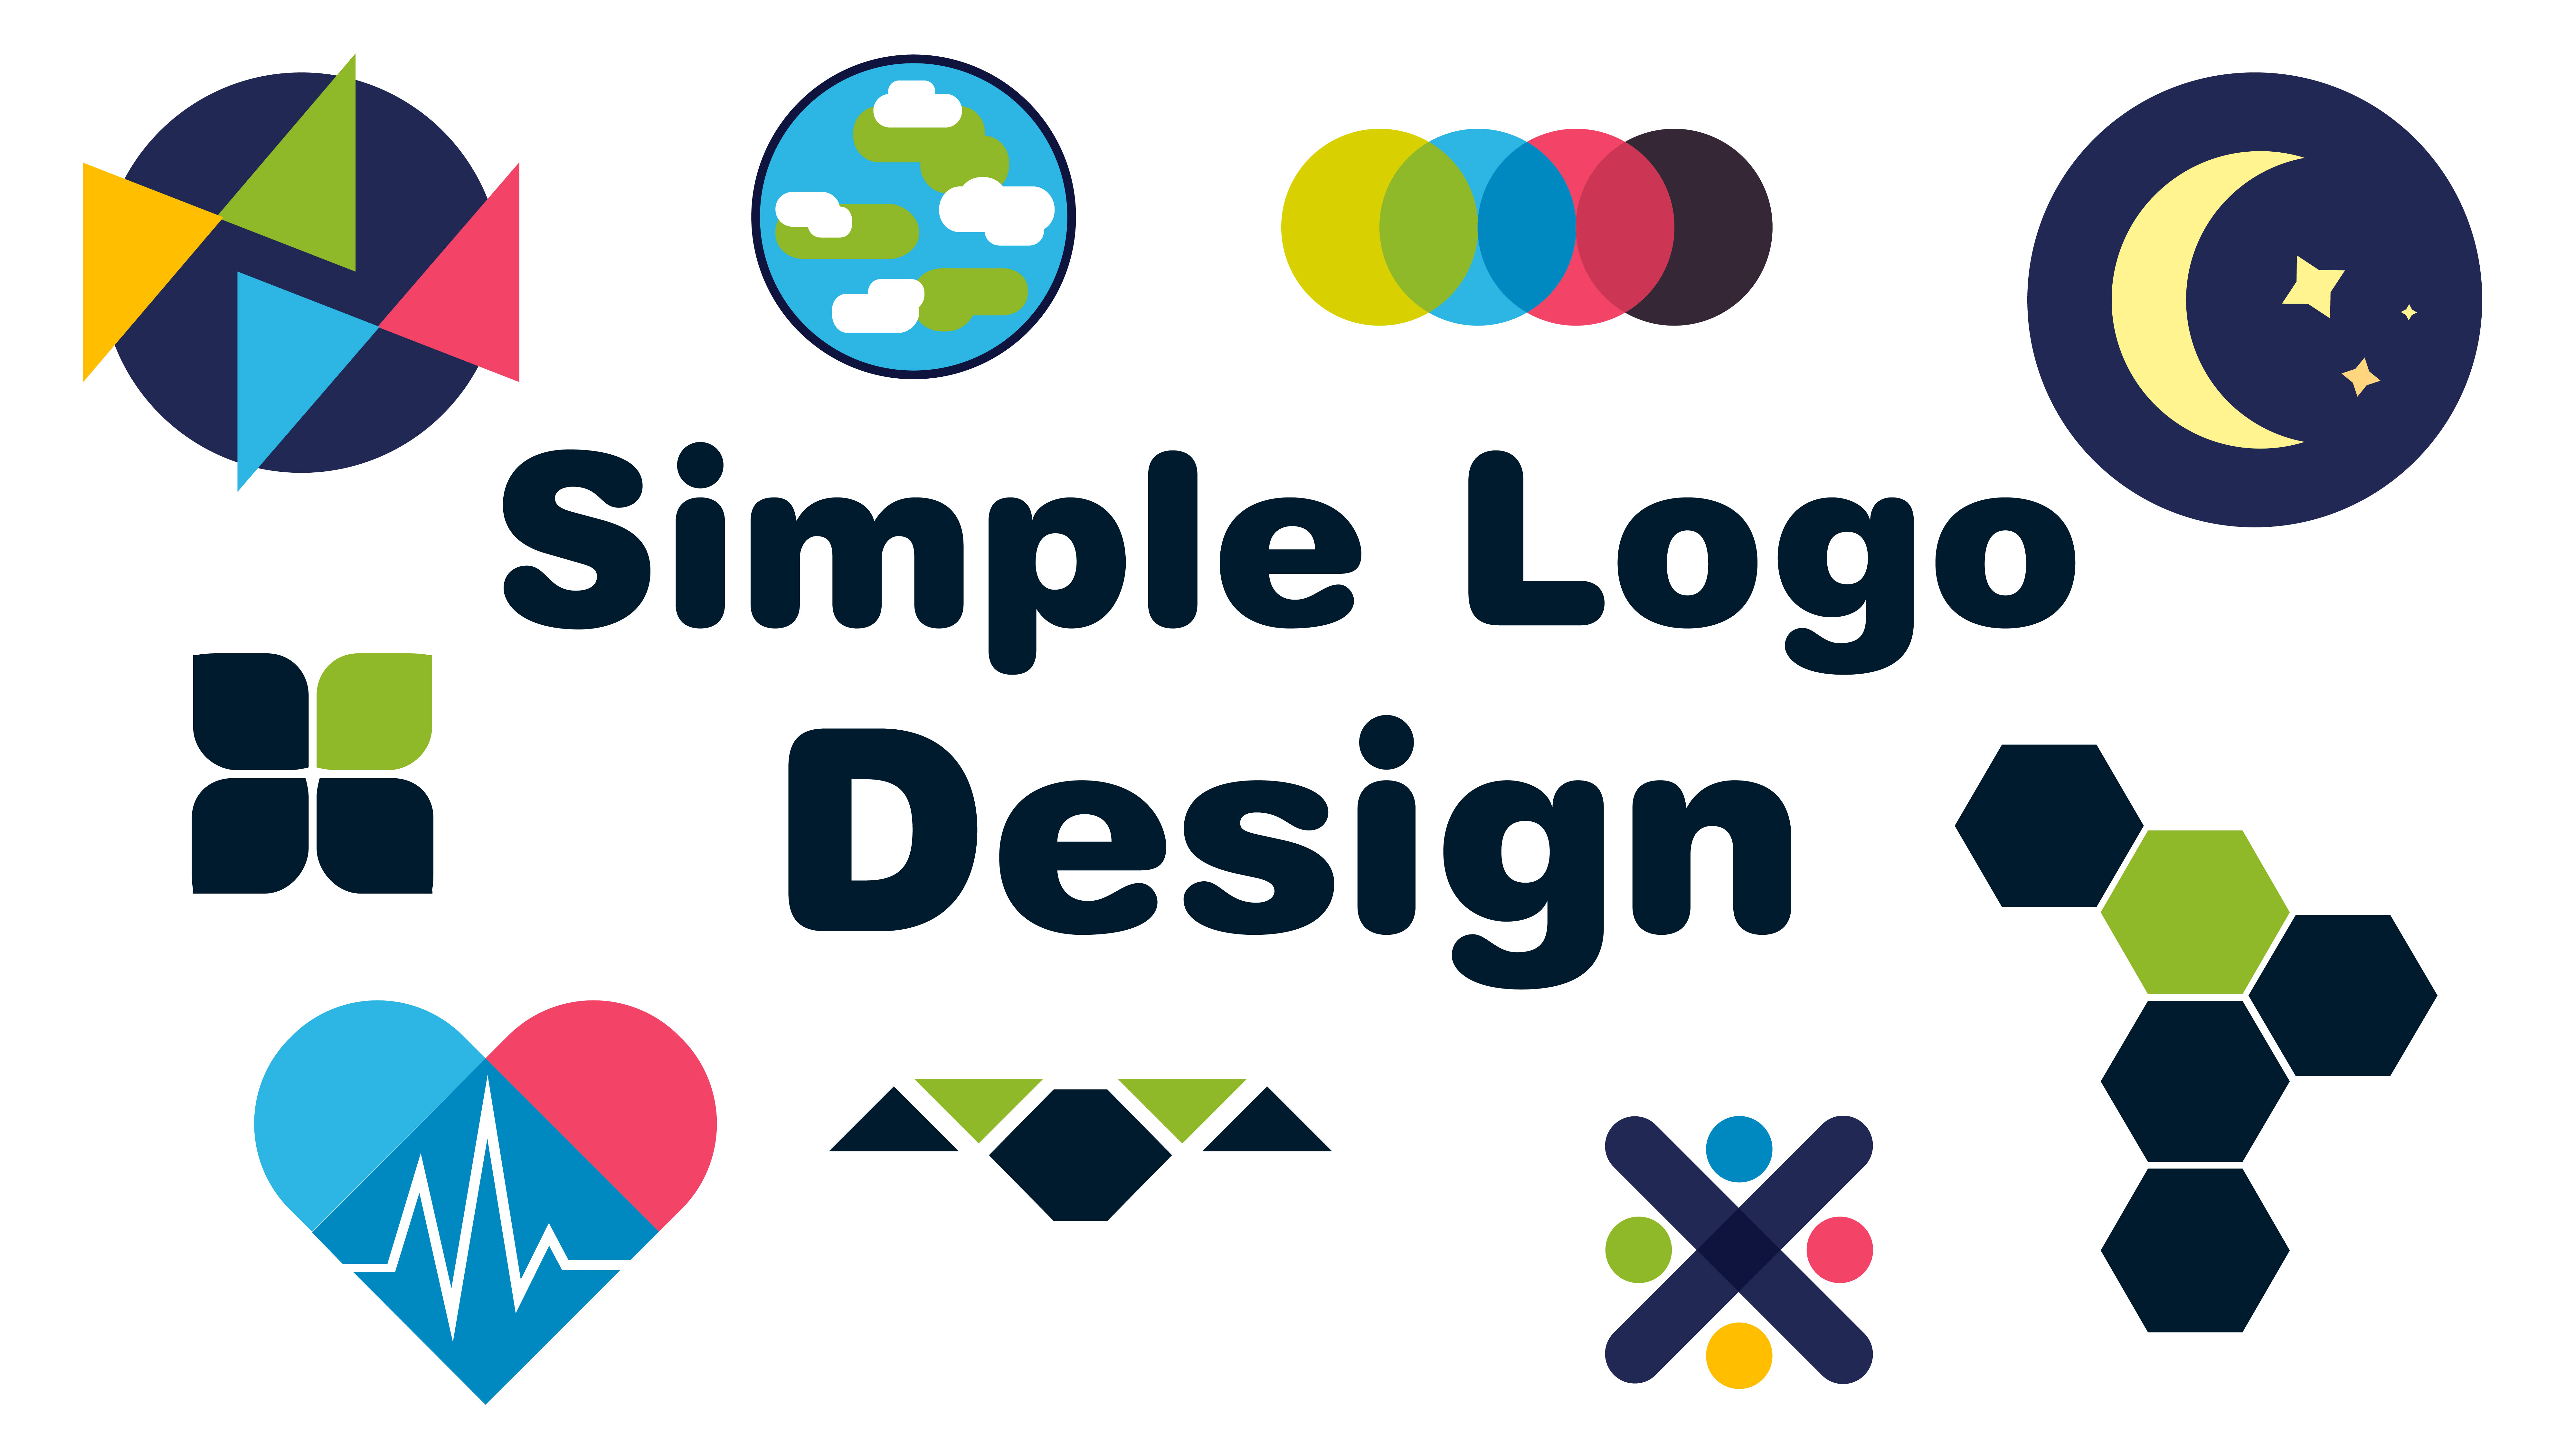 professional logo design in adobe illustrator free download